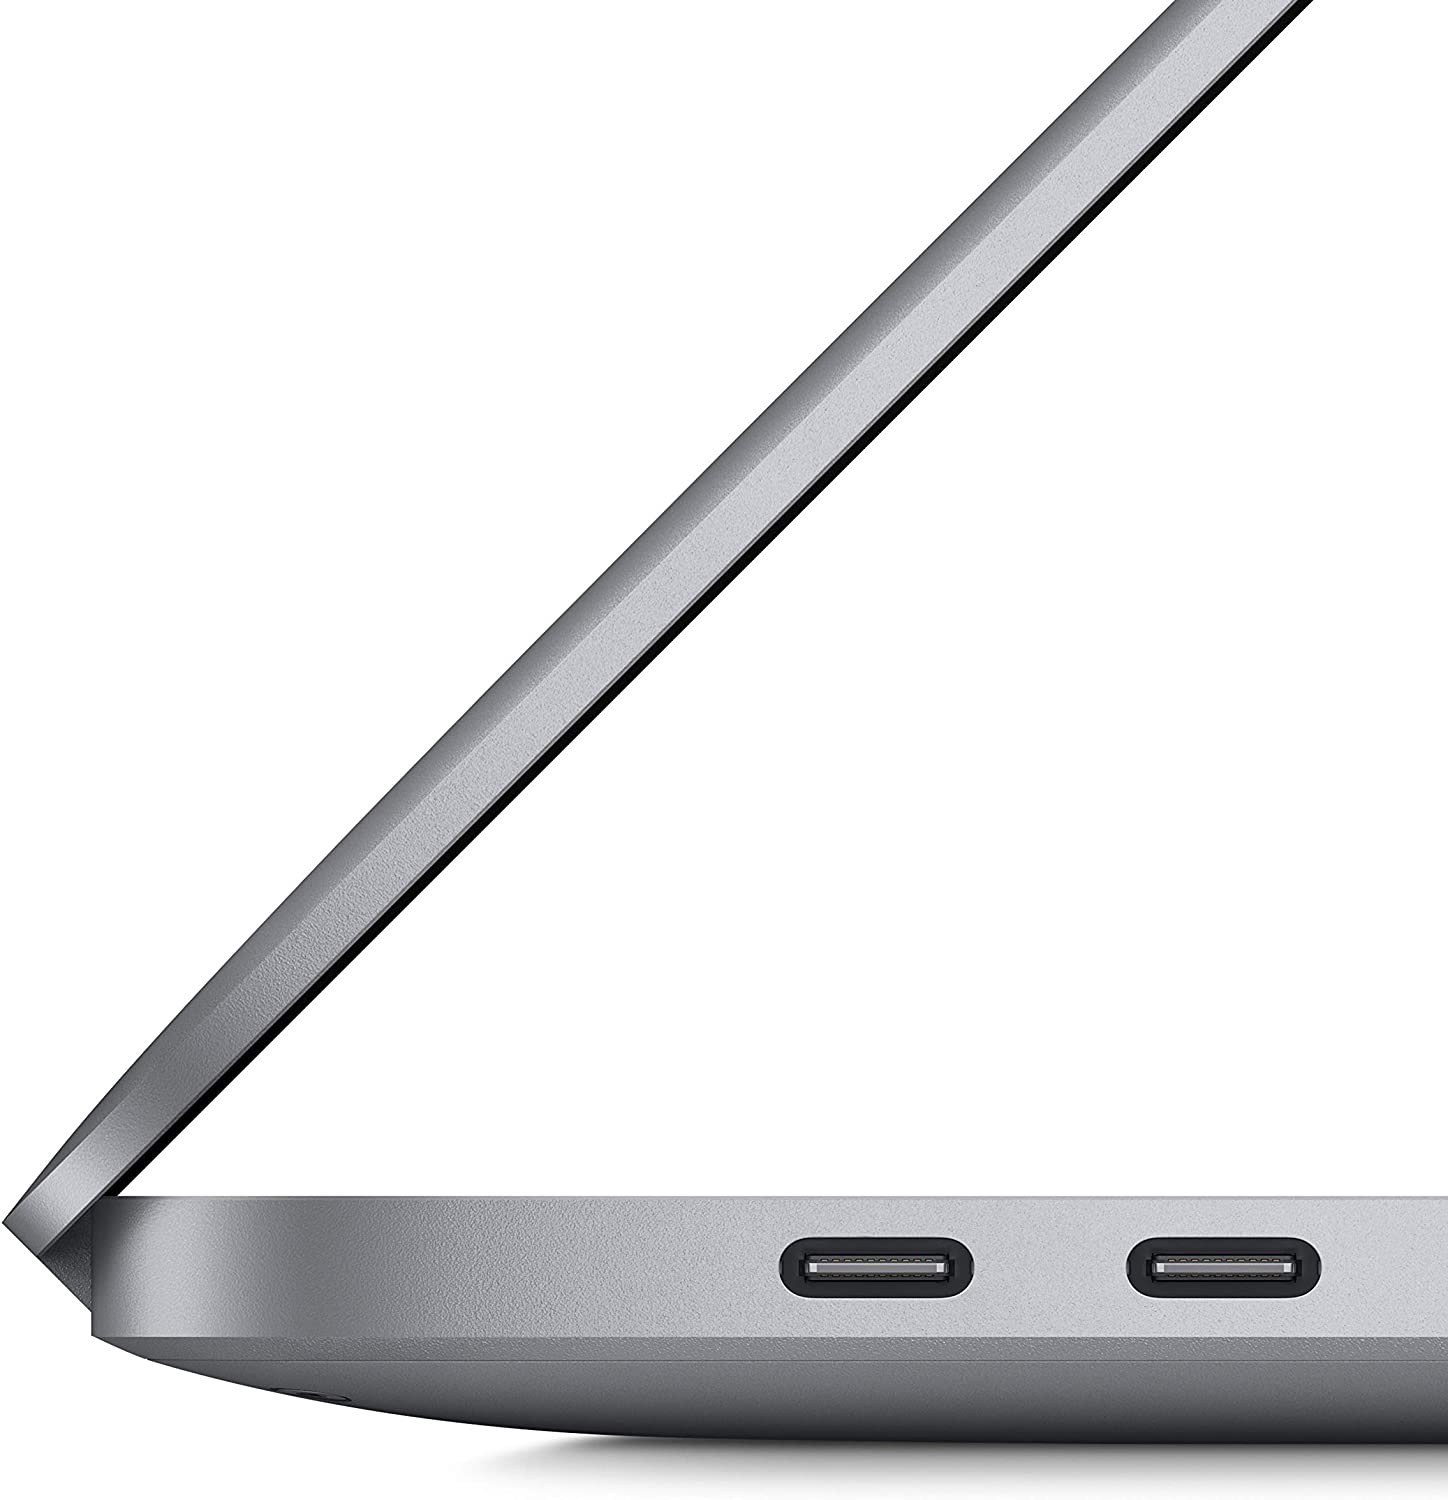 Apple MacBook Pro 16.1 (A2141) 2019 16" inches 2.6GHz, Intel Core i7, 16GB RAM, 512GB SSD,1.5GB VRAM, 4 GB graphic card (Renewed)